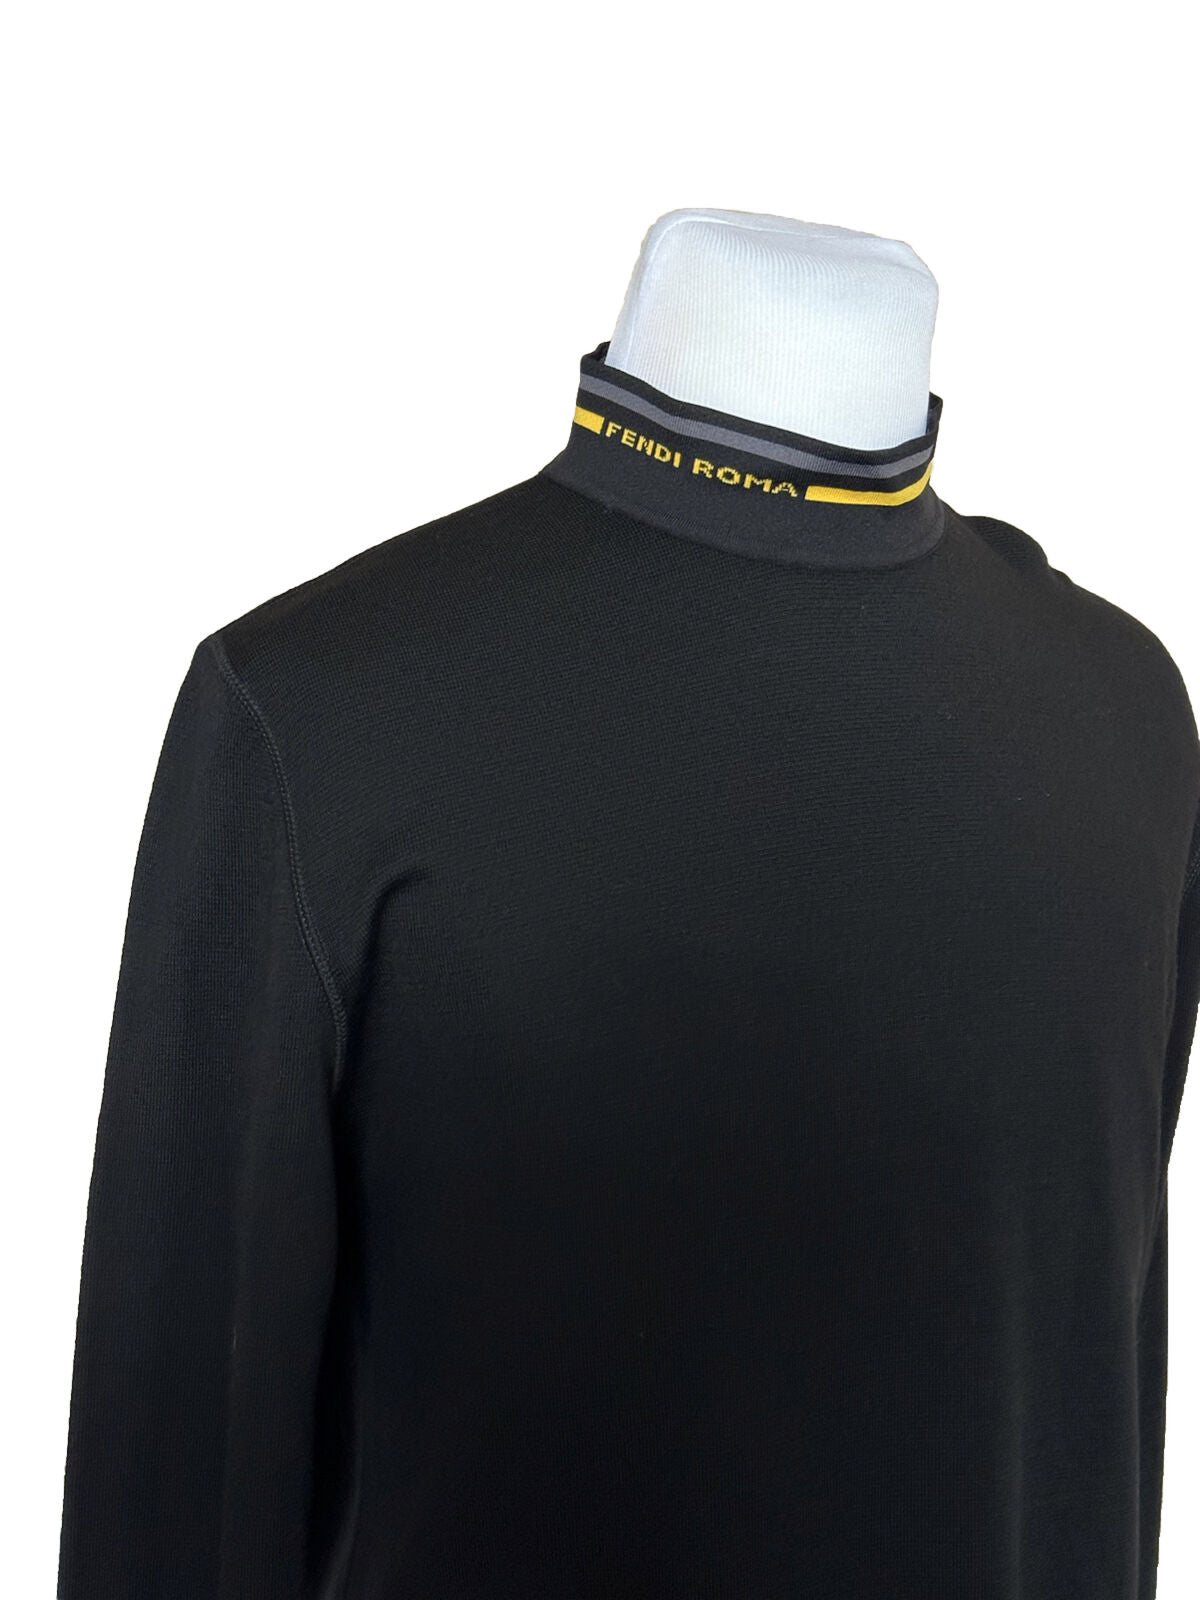 NWT $850 Fendi Wool Knit Sweater Black 58 Euro FZY464 Made in Italy